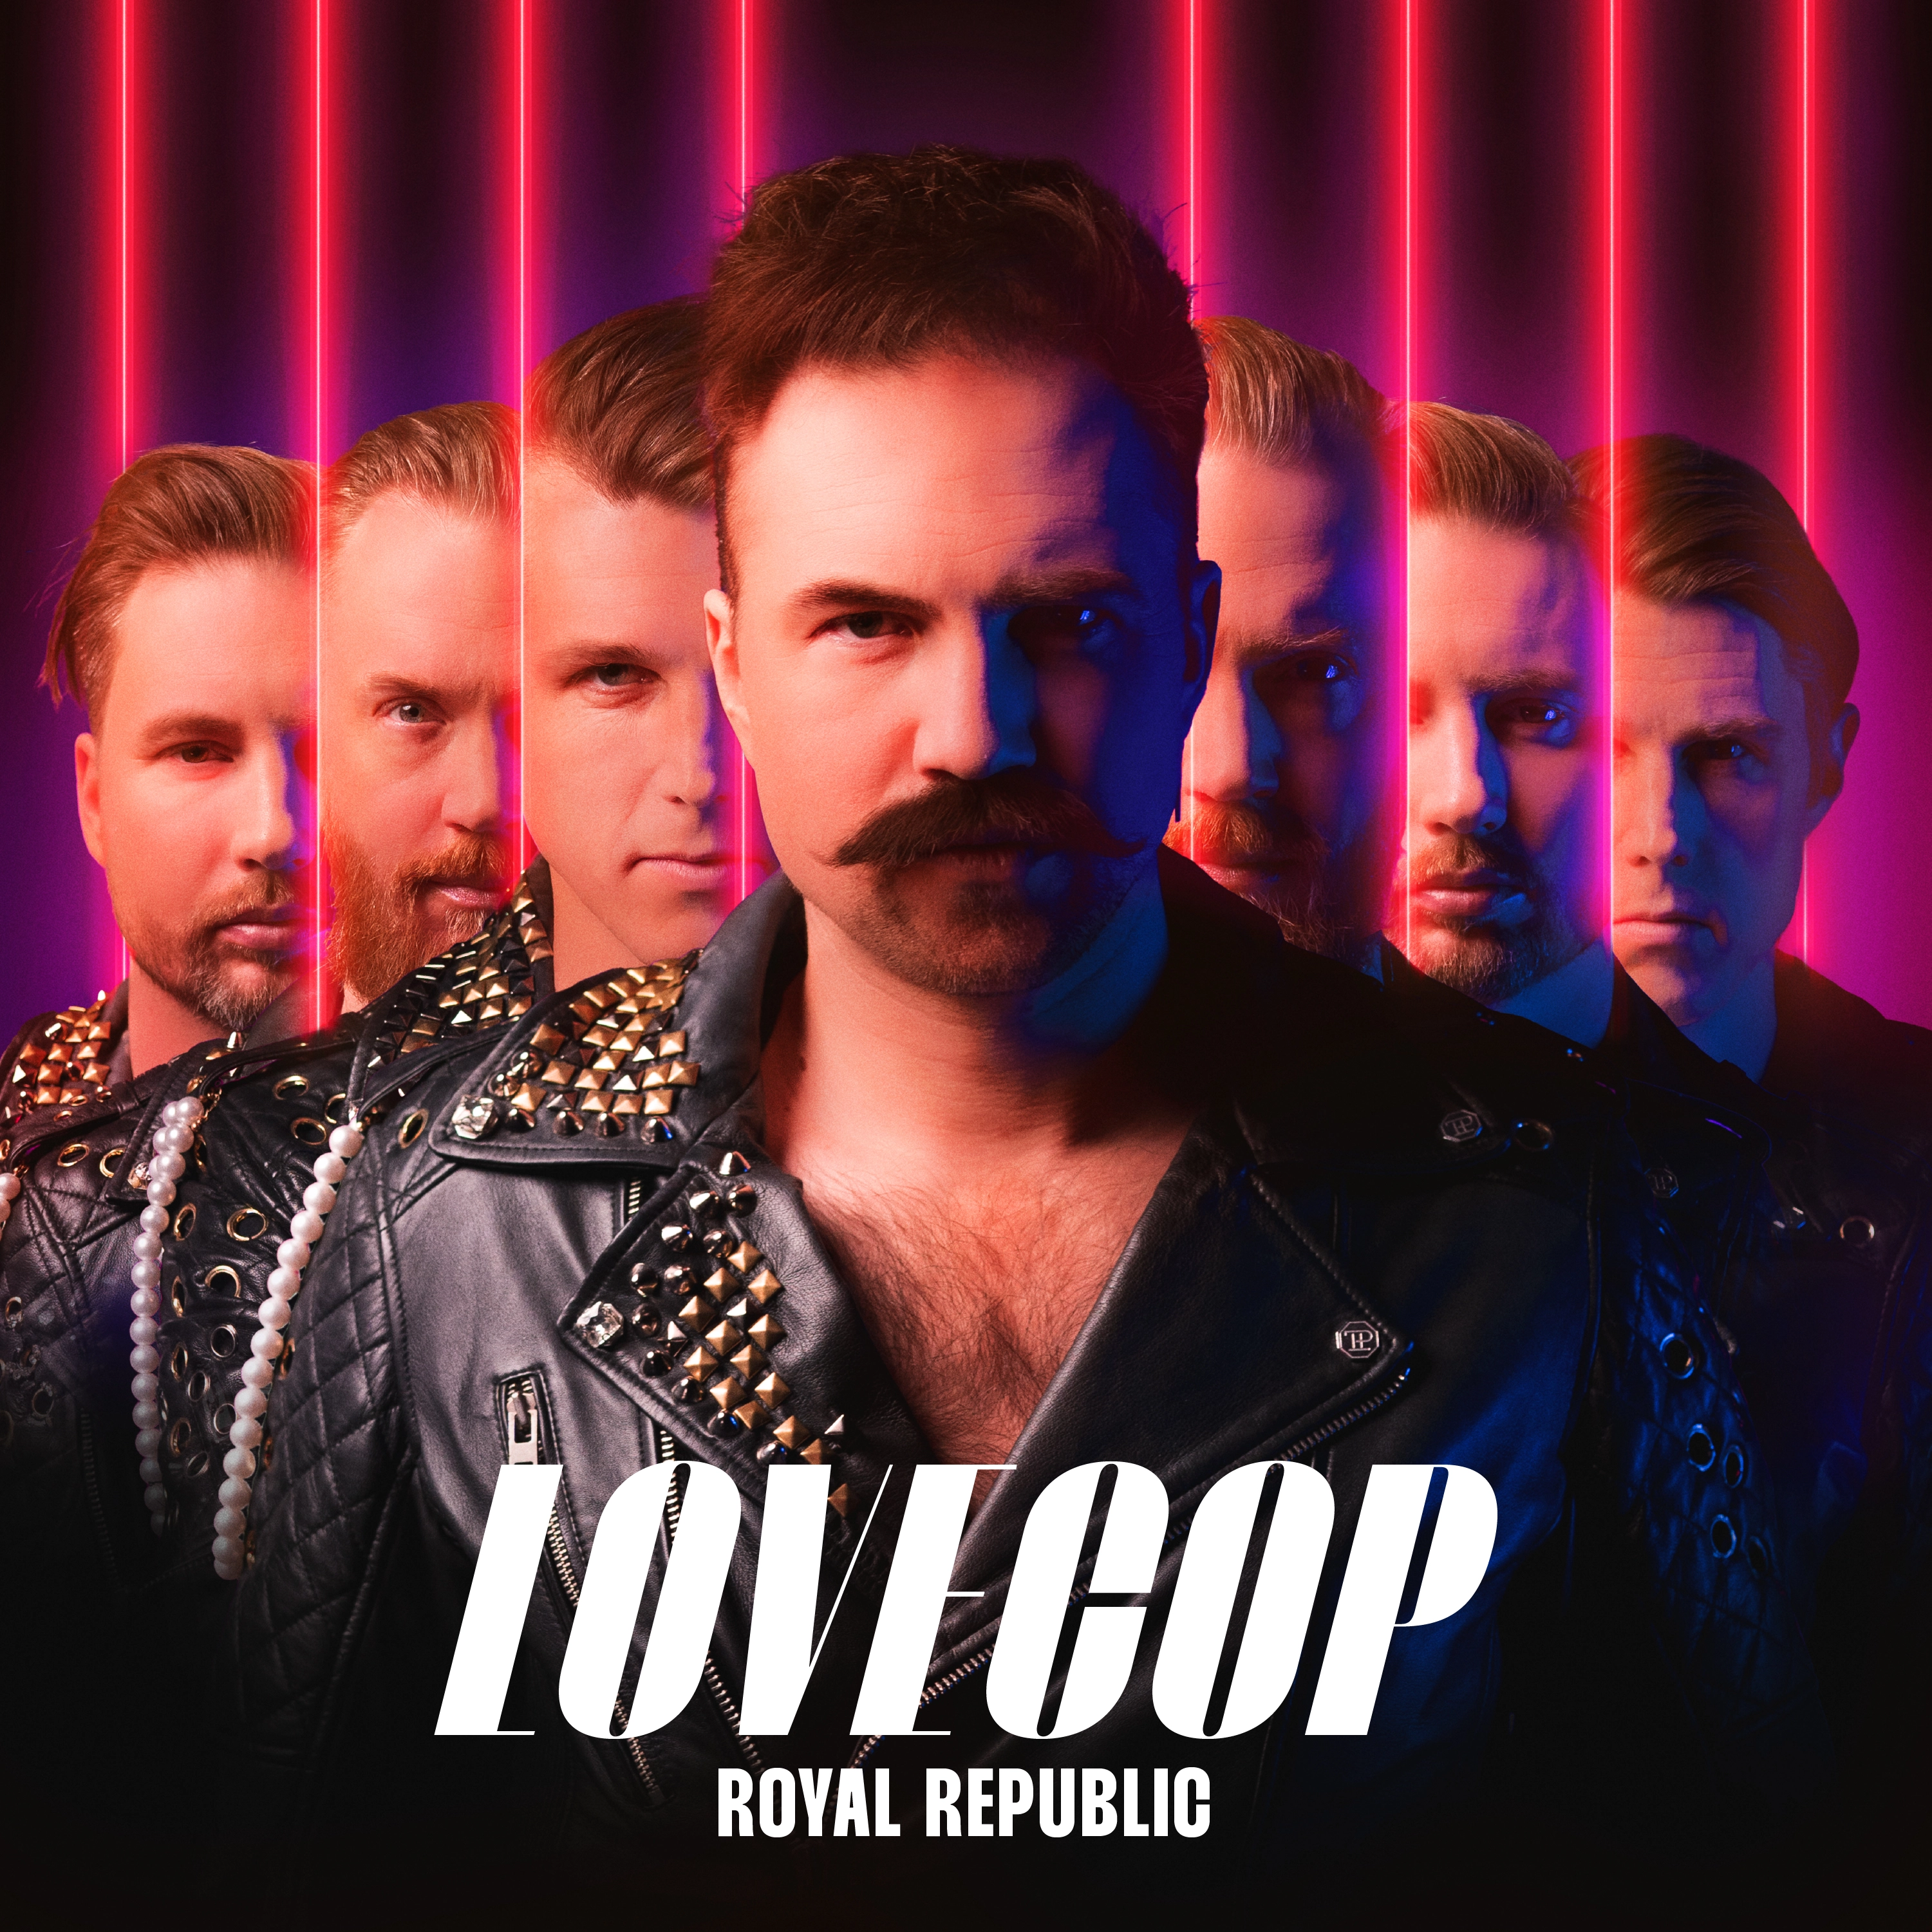 ROYAL REPUBLIC - LoveCop [DIGISLEEVE CD]